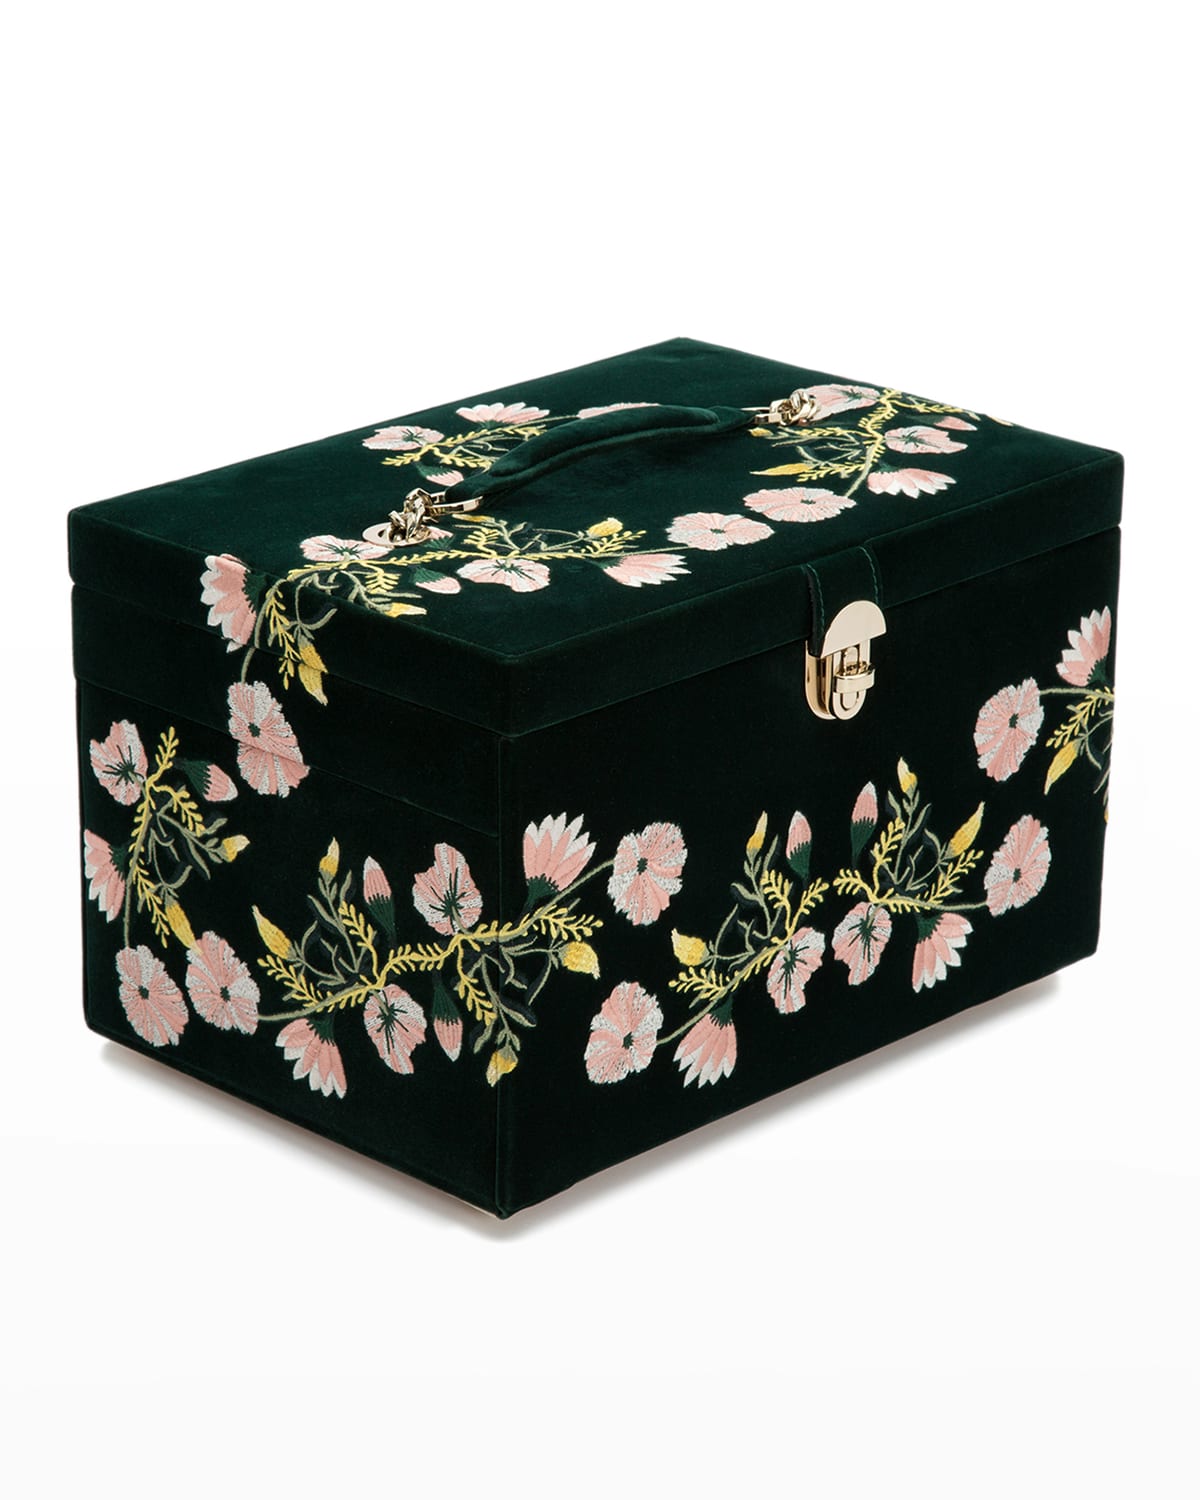 2 piece bone china jewelry box with purple flowers Beautiful duck trinket box gift for her